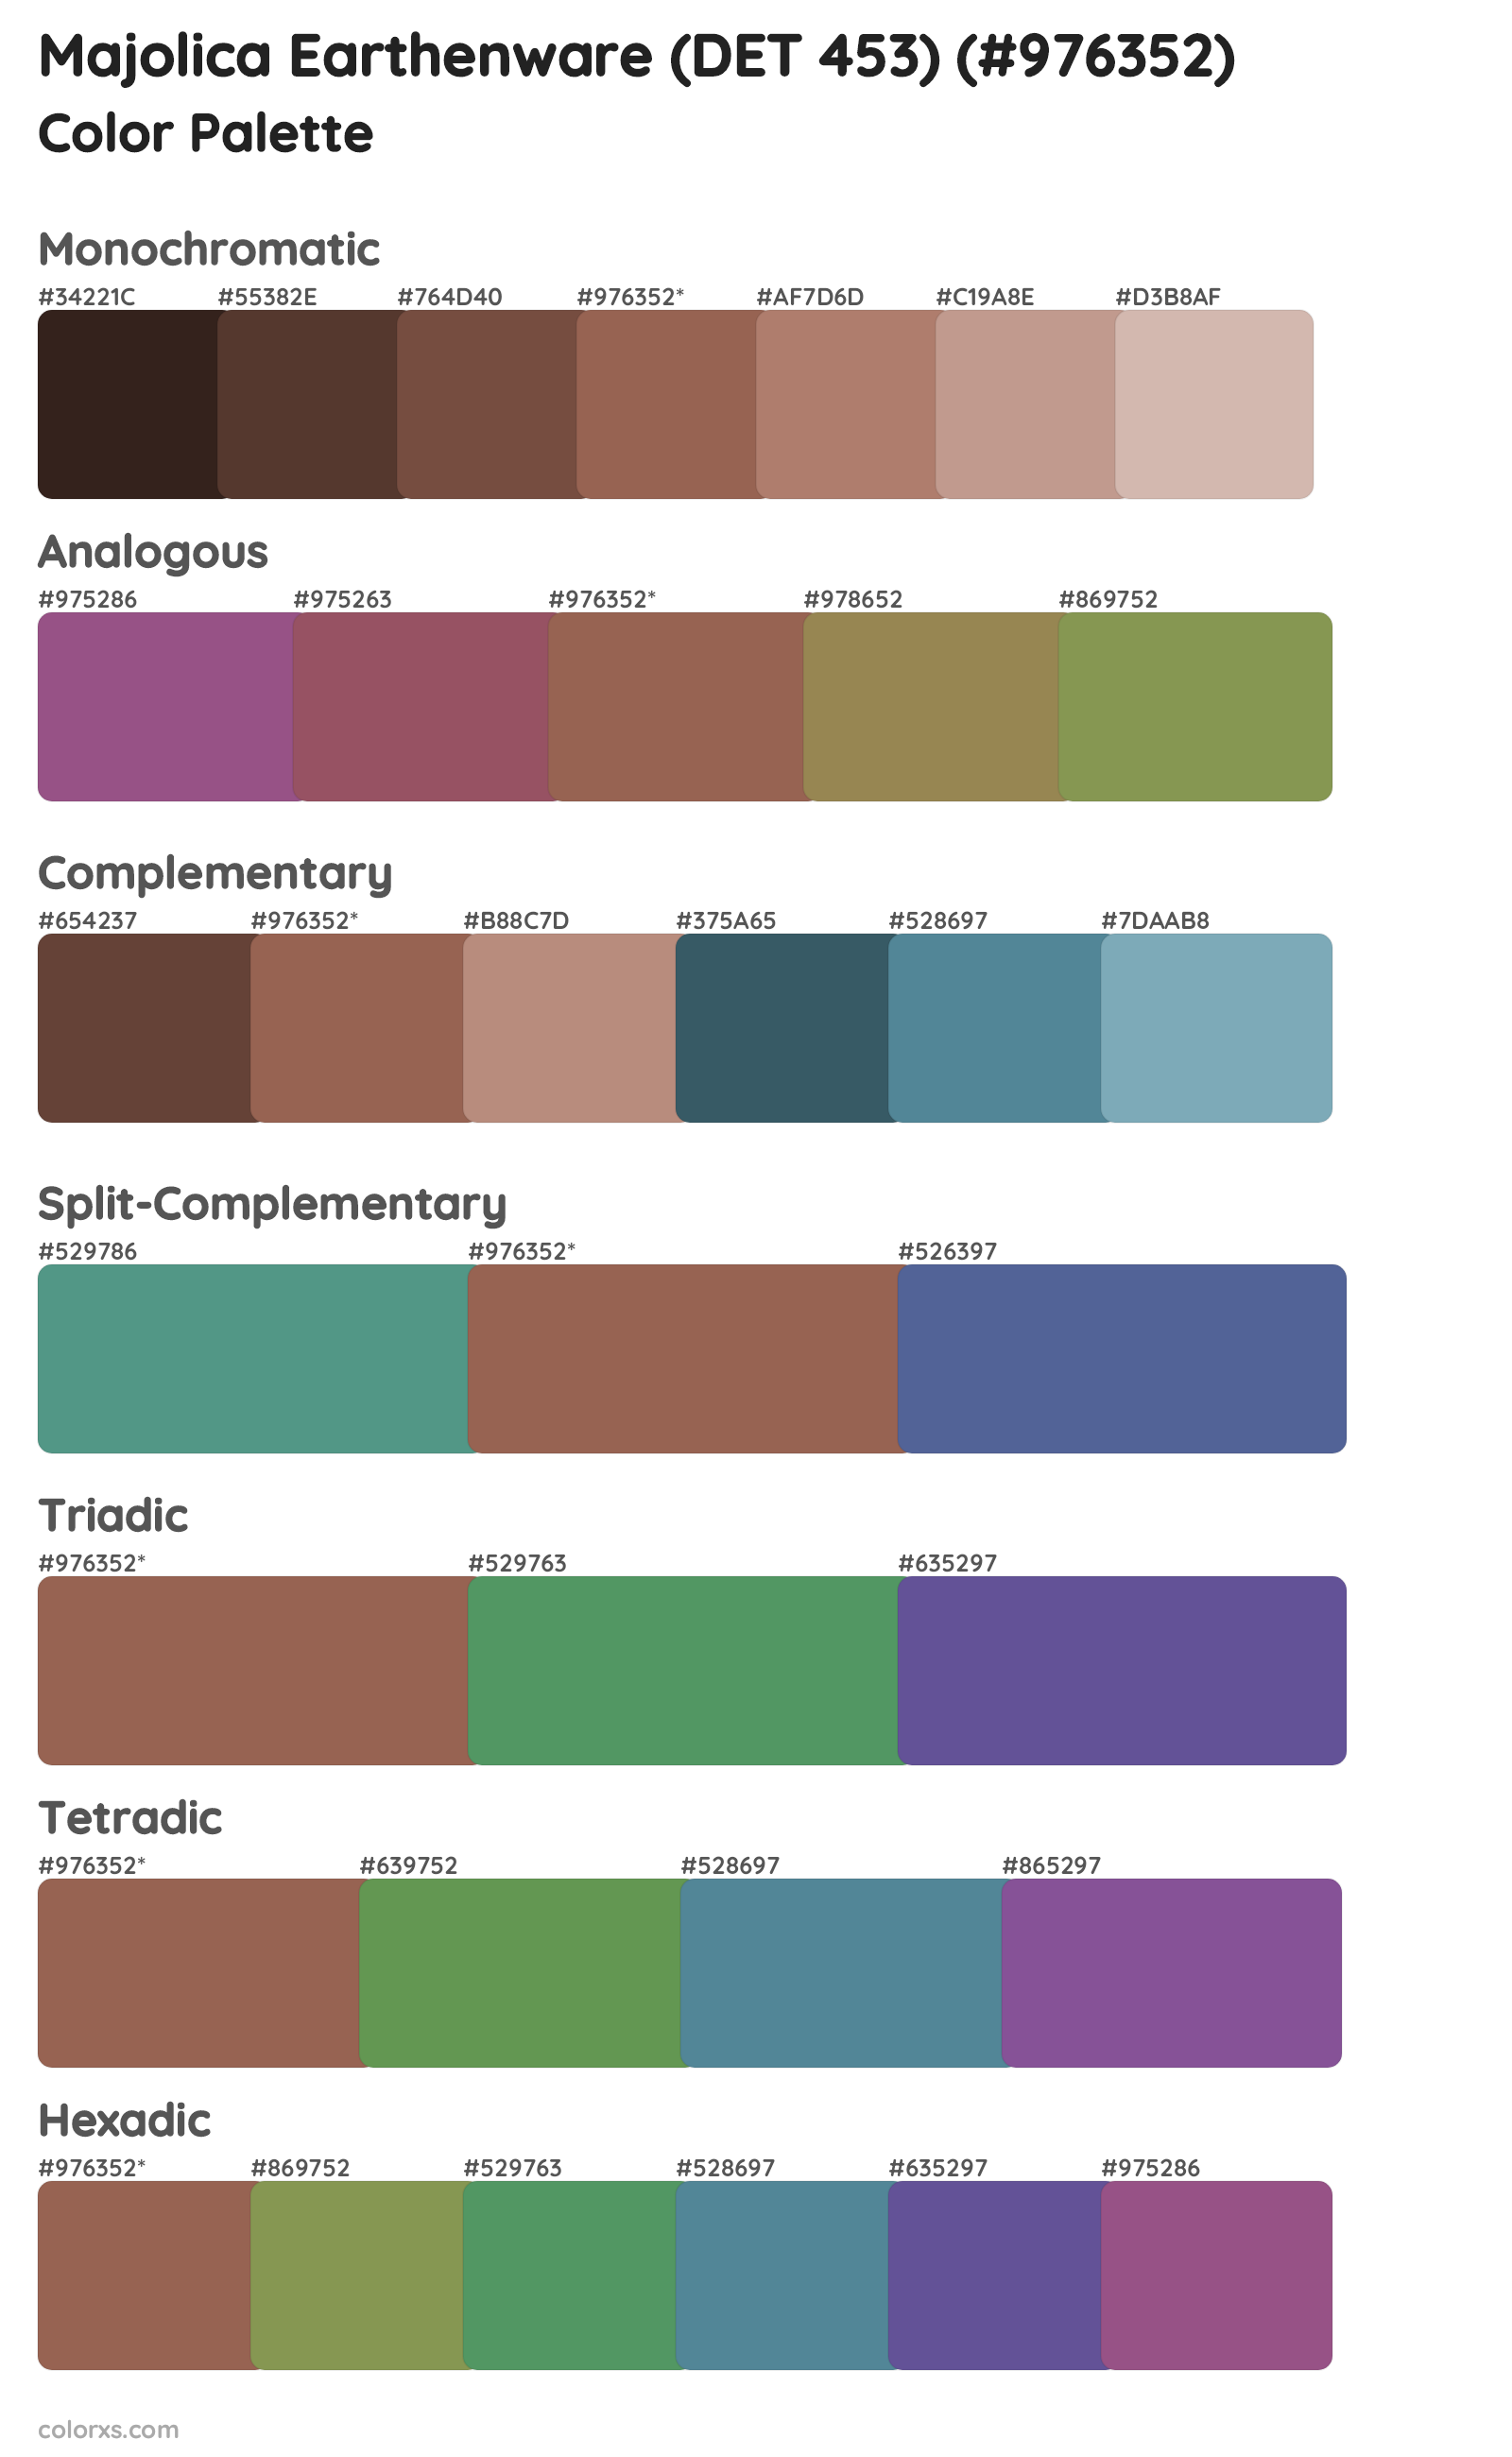 Majolica Earthenware (DET 453) Color Scheme Palettes